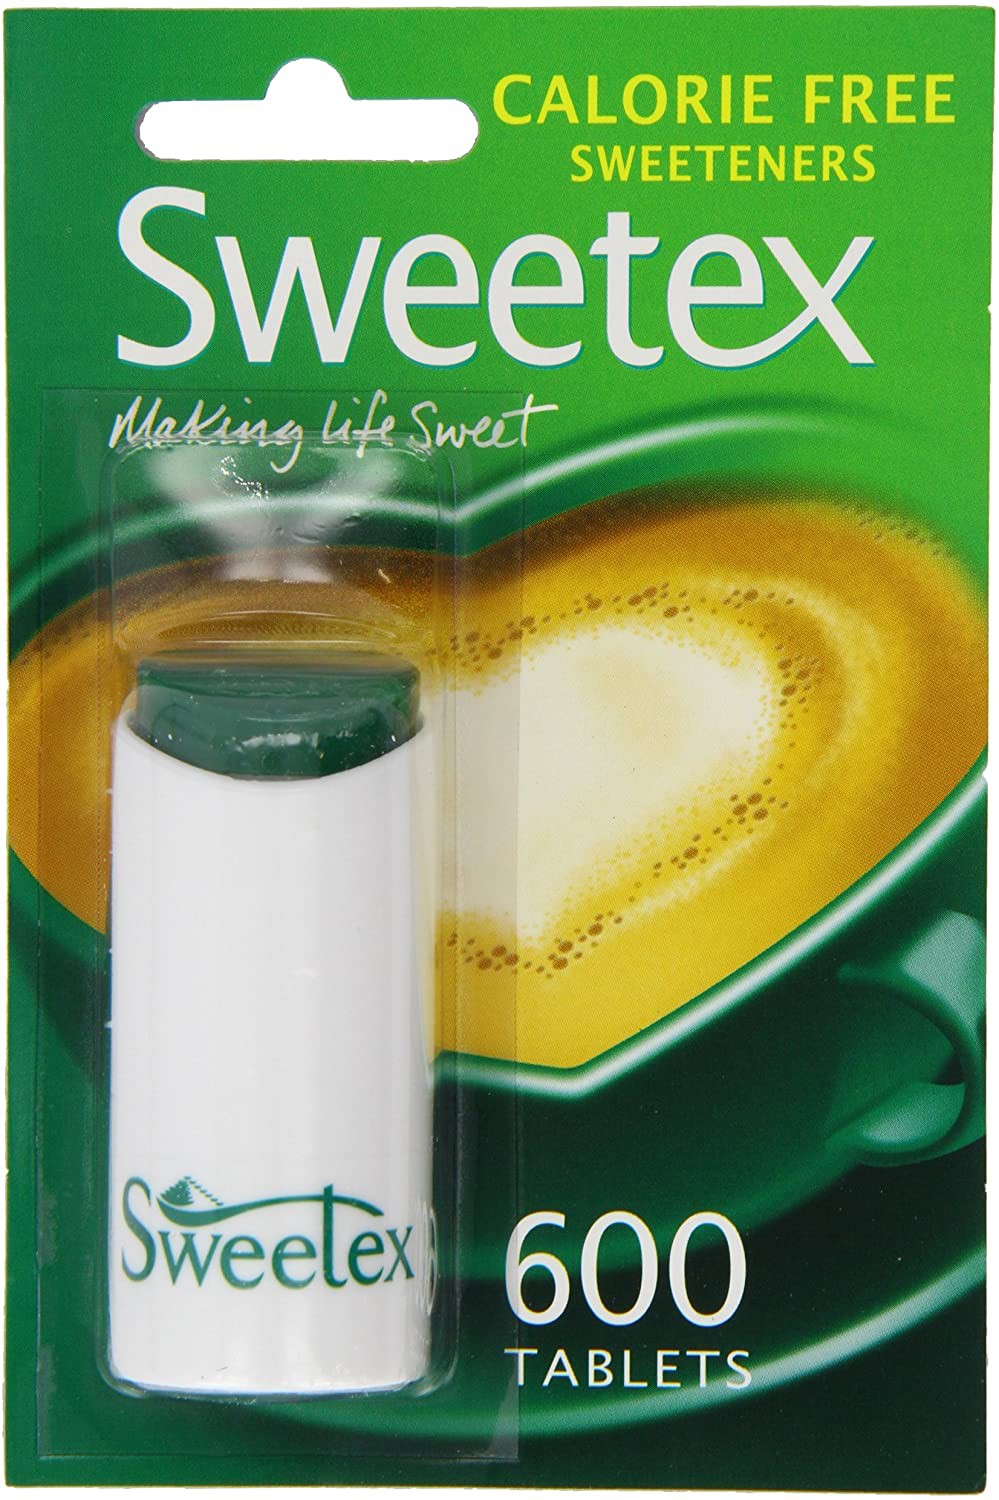 Sweetex+Calorie+Free+Sweeteners+600+Tablets